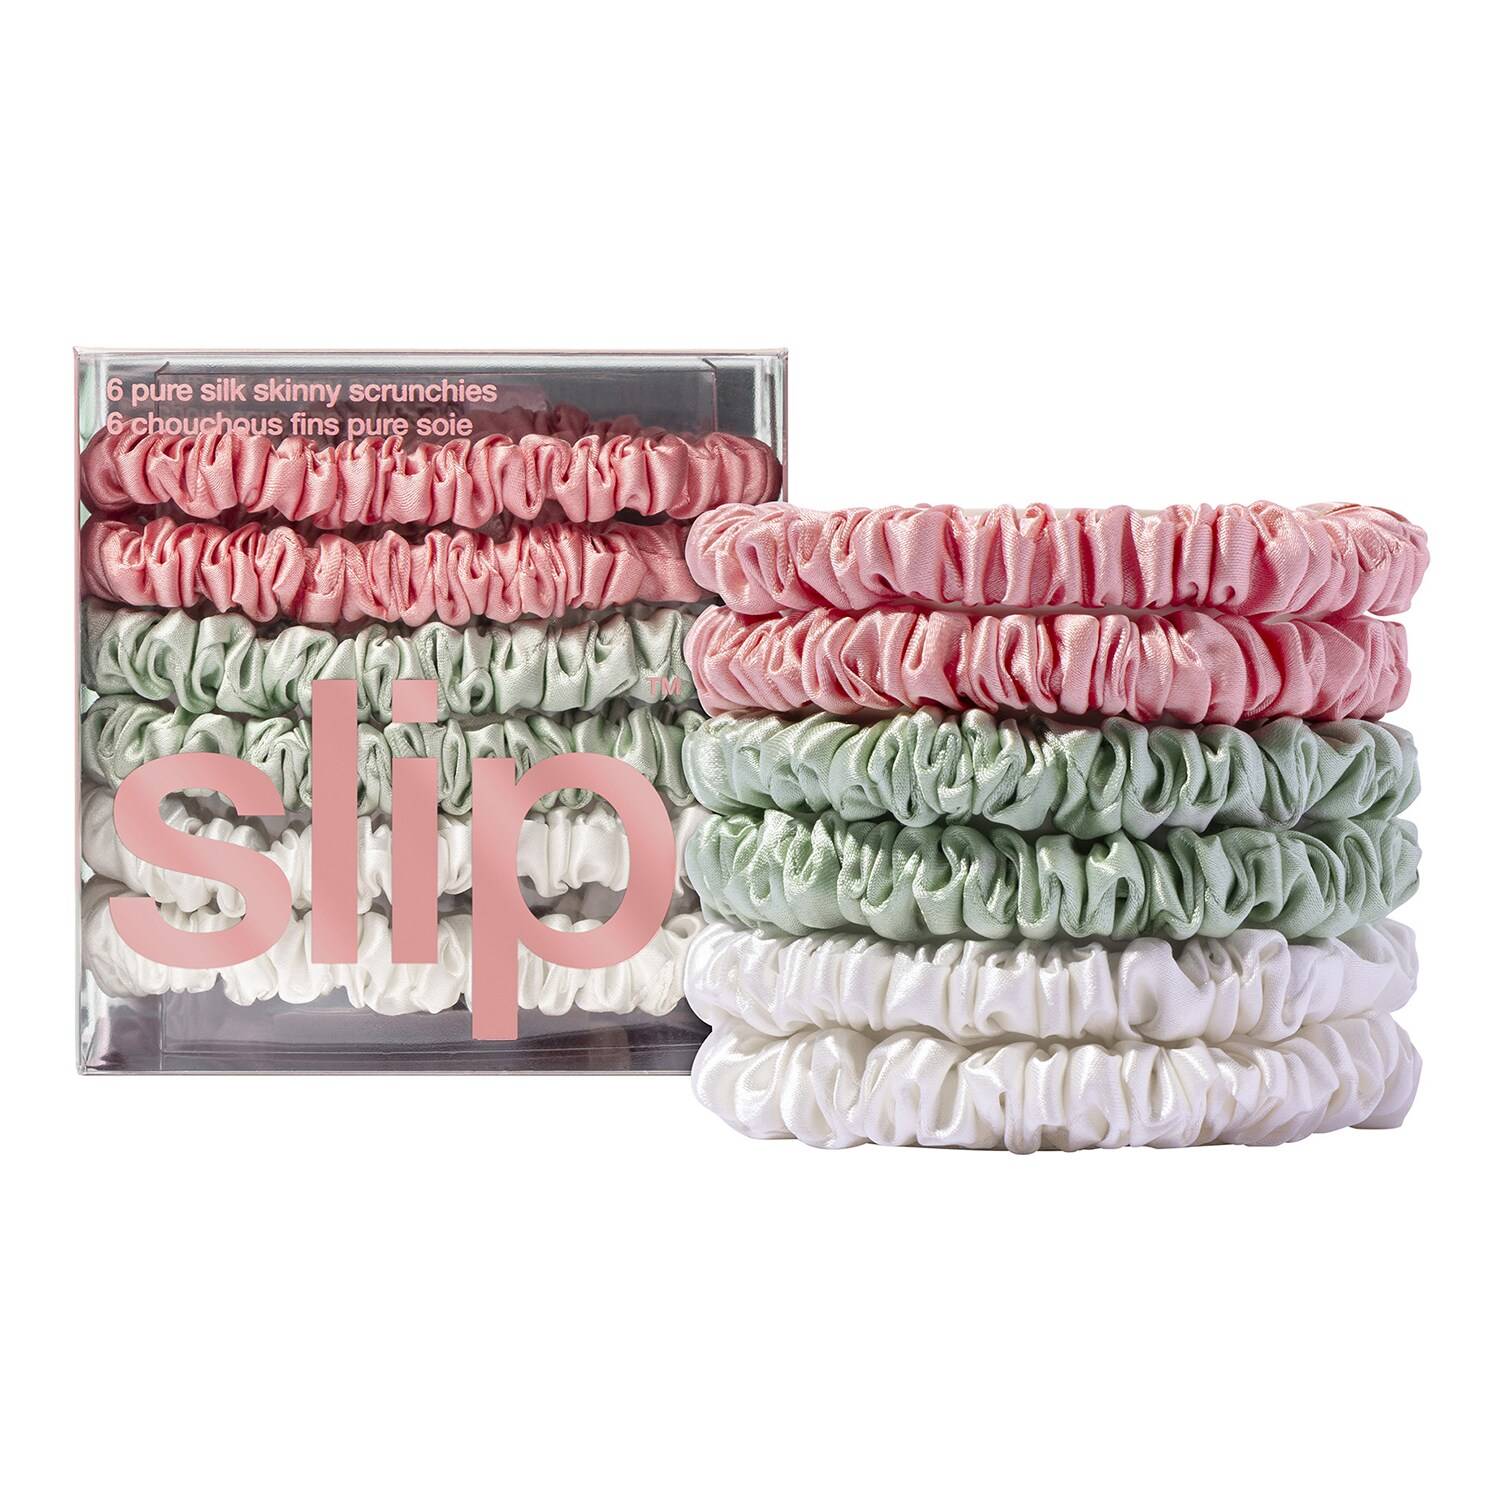 Slip Pure Silk Skinny Scrunchies - Bellerose 6 Pieces